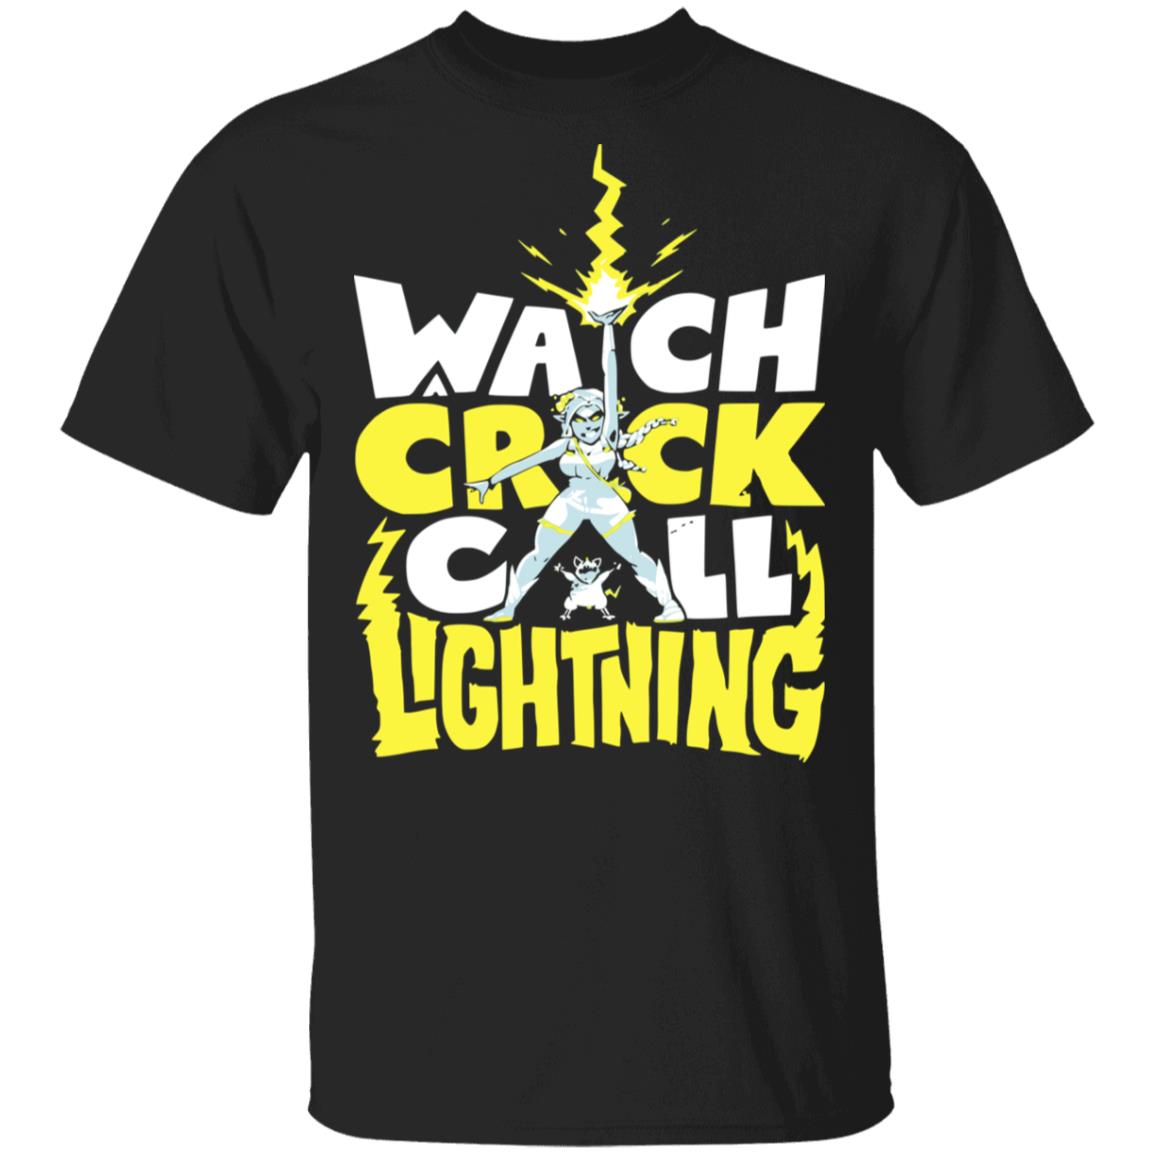 Naddpod Merch Watch A Crick Call Lightning Tee
#NaddpodMerch #NaddpodMerch #CrickCallLightningTee #DnD #PodcastMerch #TabletopGaming #NerdFashion #GeekStyle #CriticalRoleFans #LimitedEdition #FantasyFashion #USGeeks #MerchAlert

tipatee.com/product/naddpo…